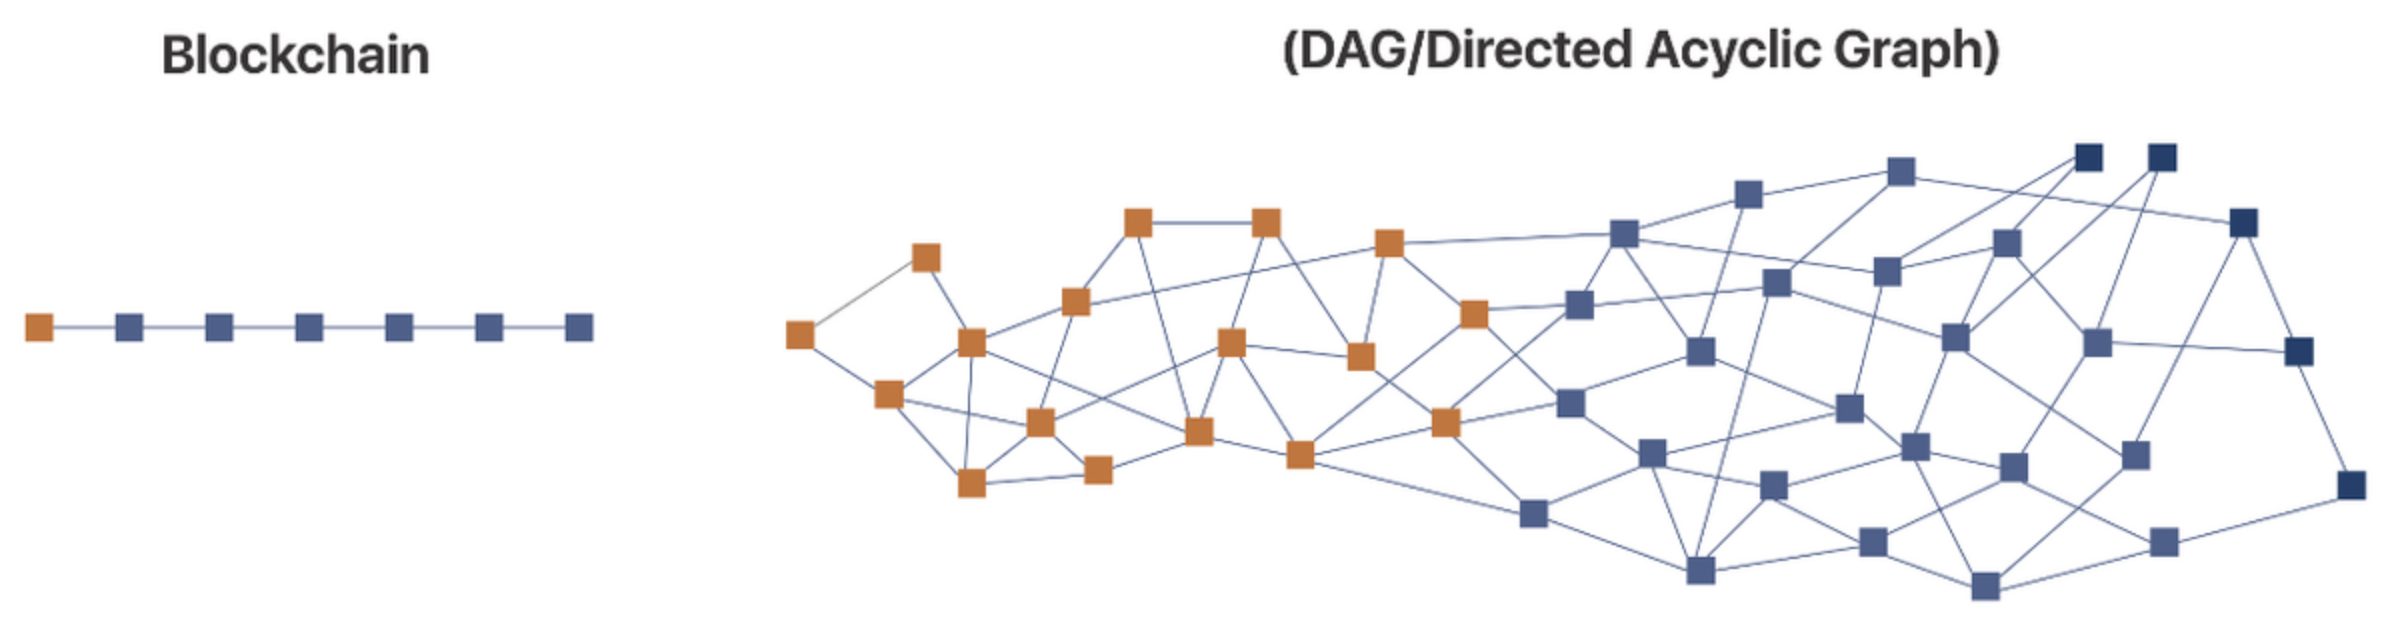 Blockchain vs DAG